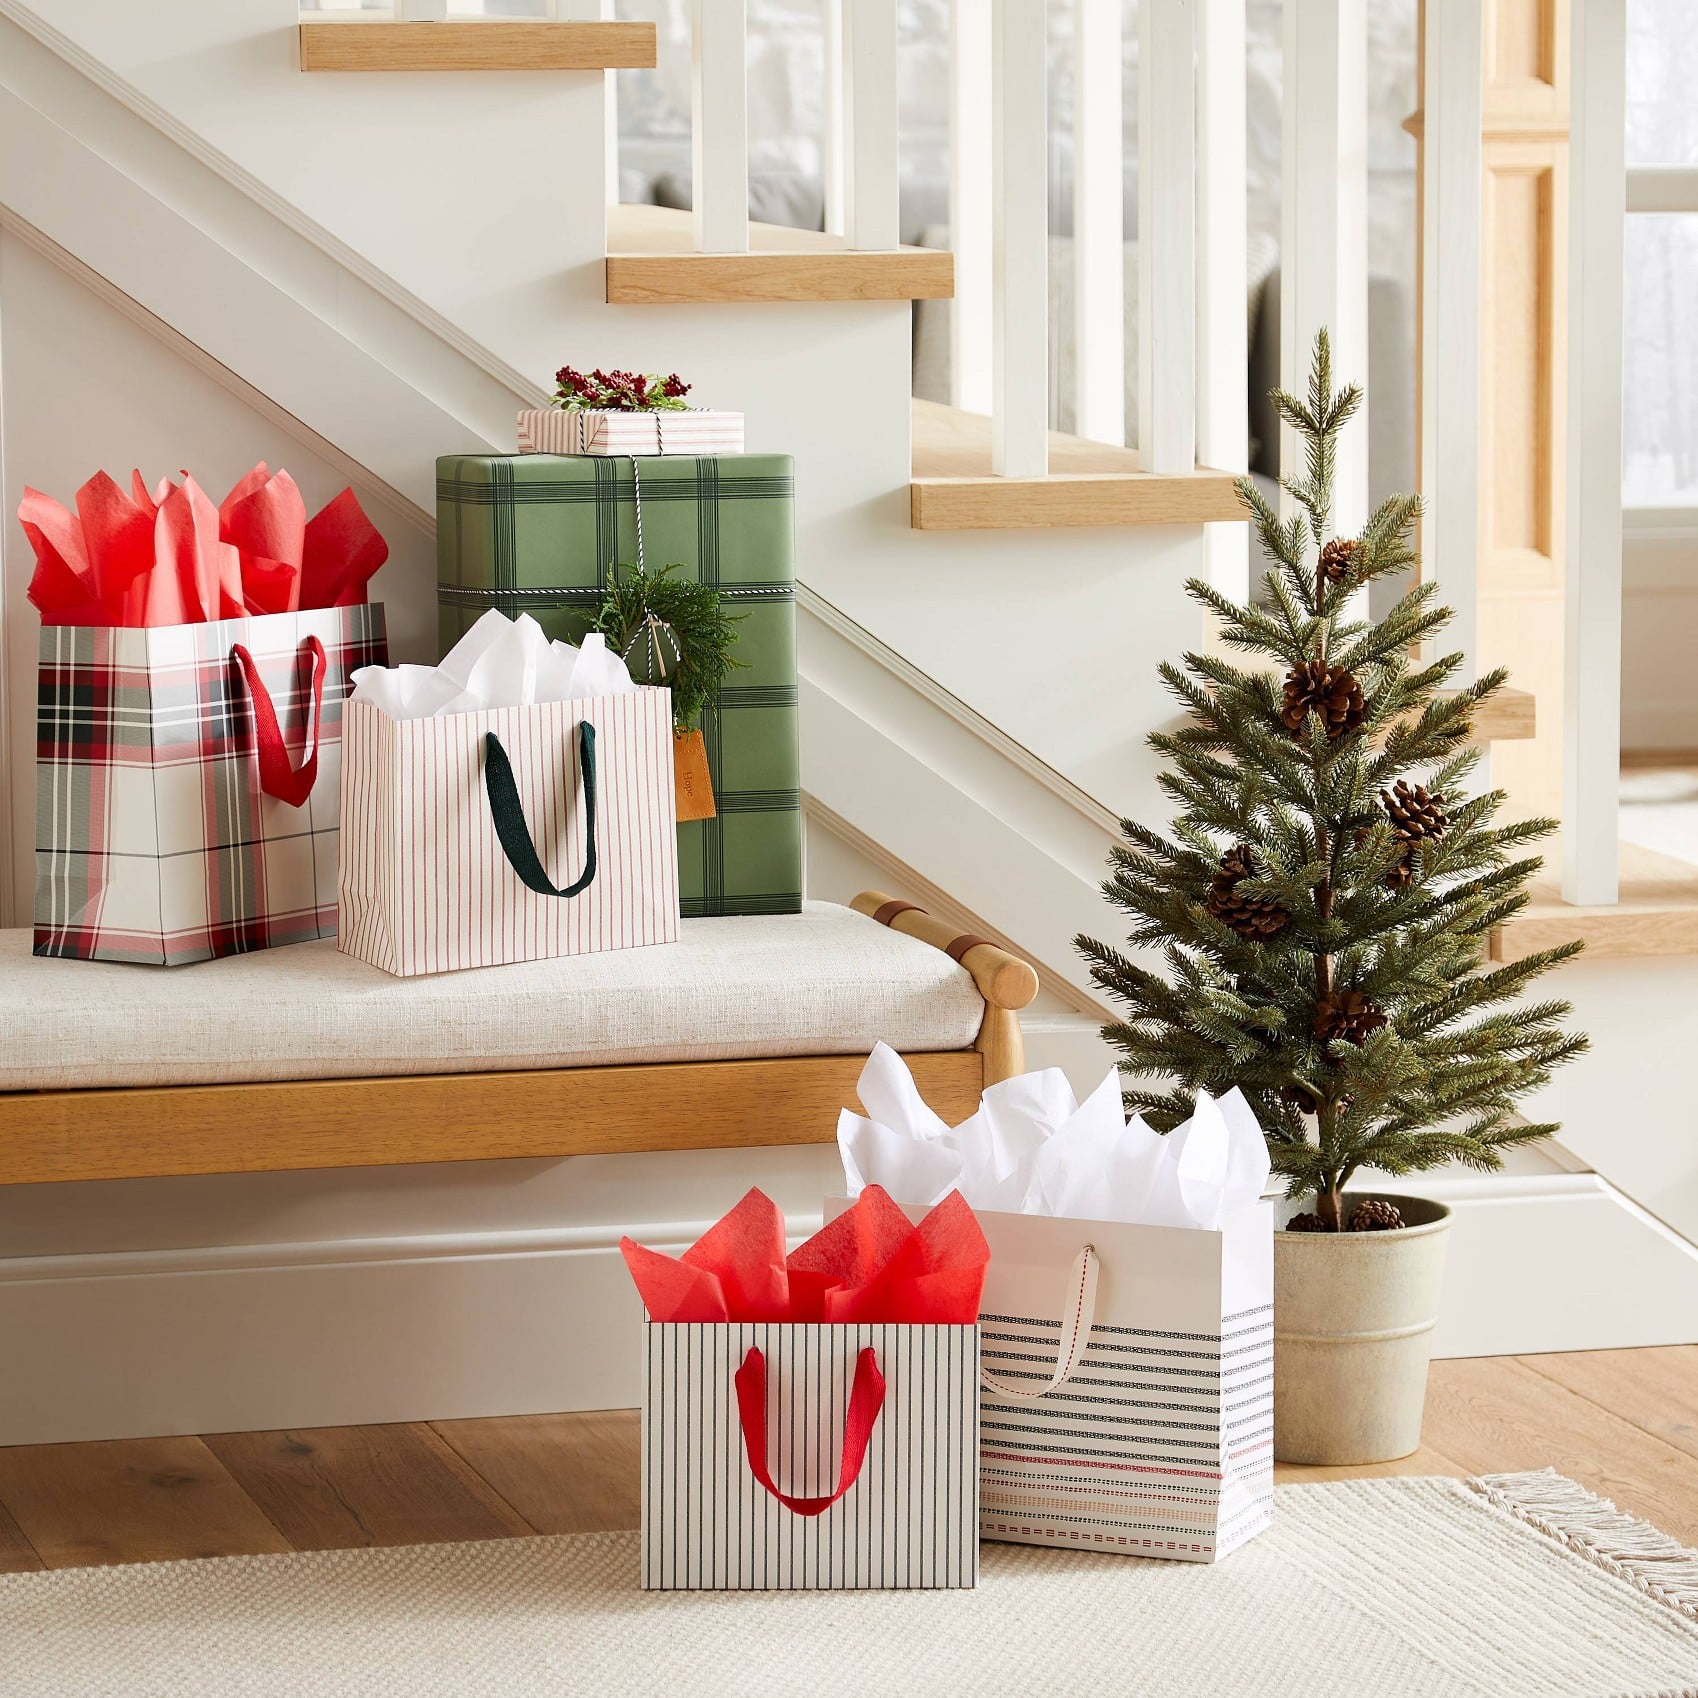 New w Tag Dish Towel Park Designs Christmas Tree Jacquard Fabric Gift Present 